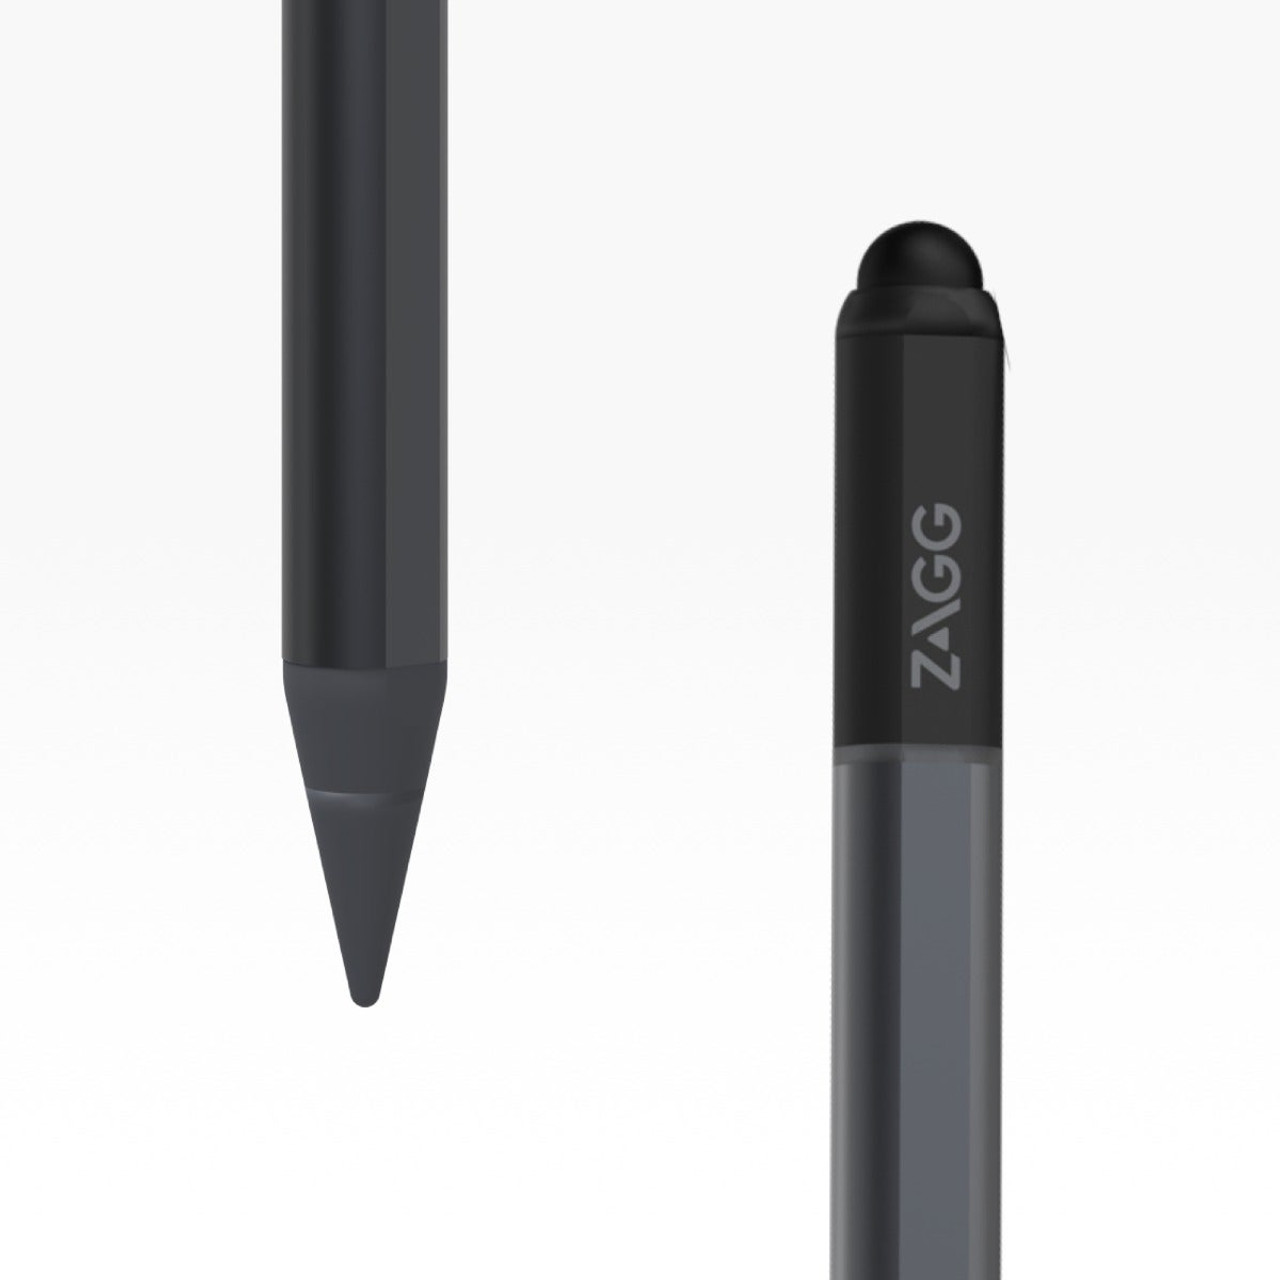  Stylus Pen - black